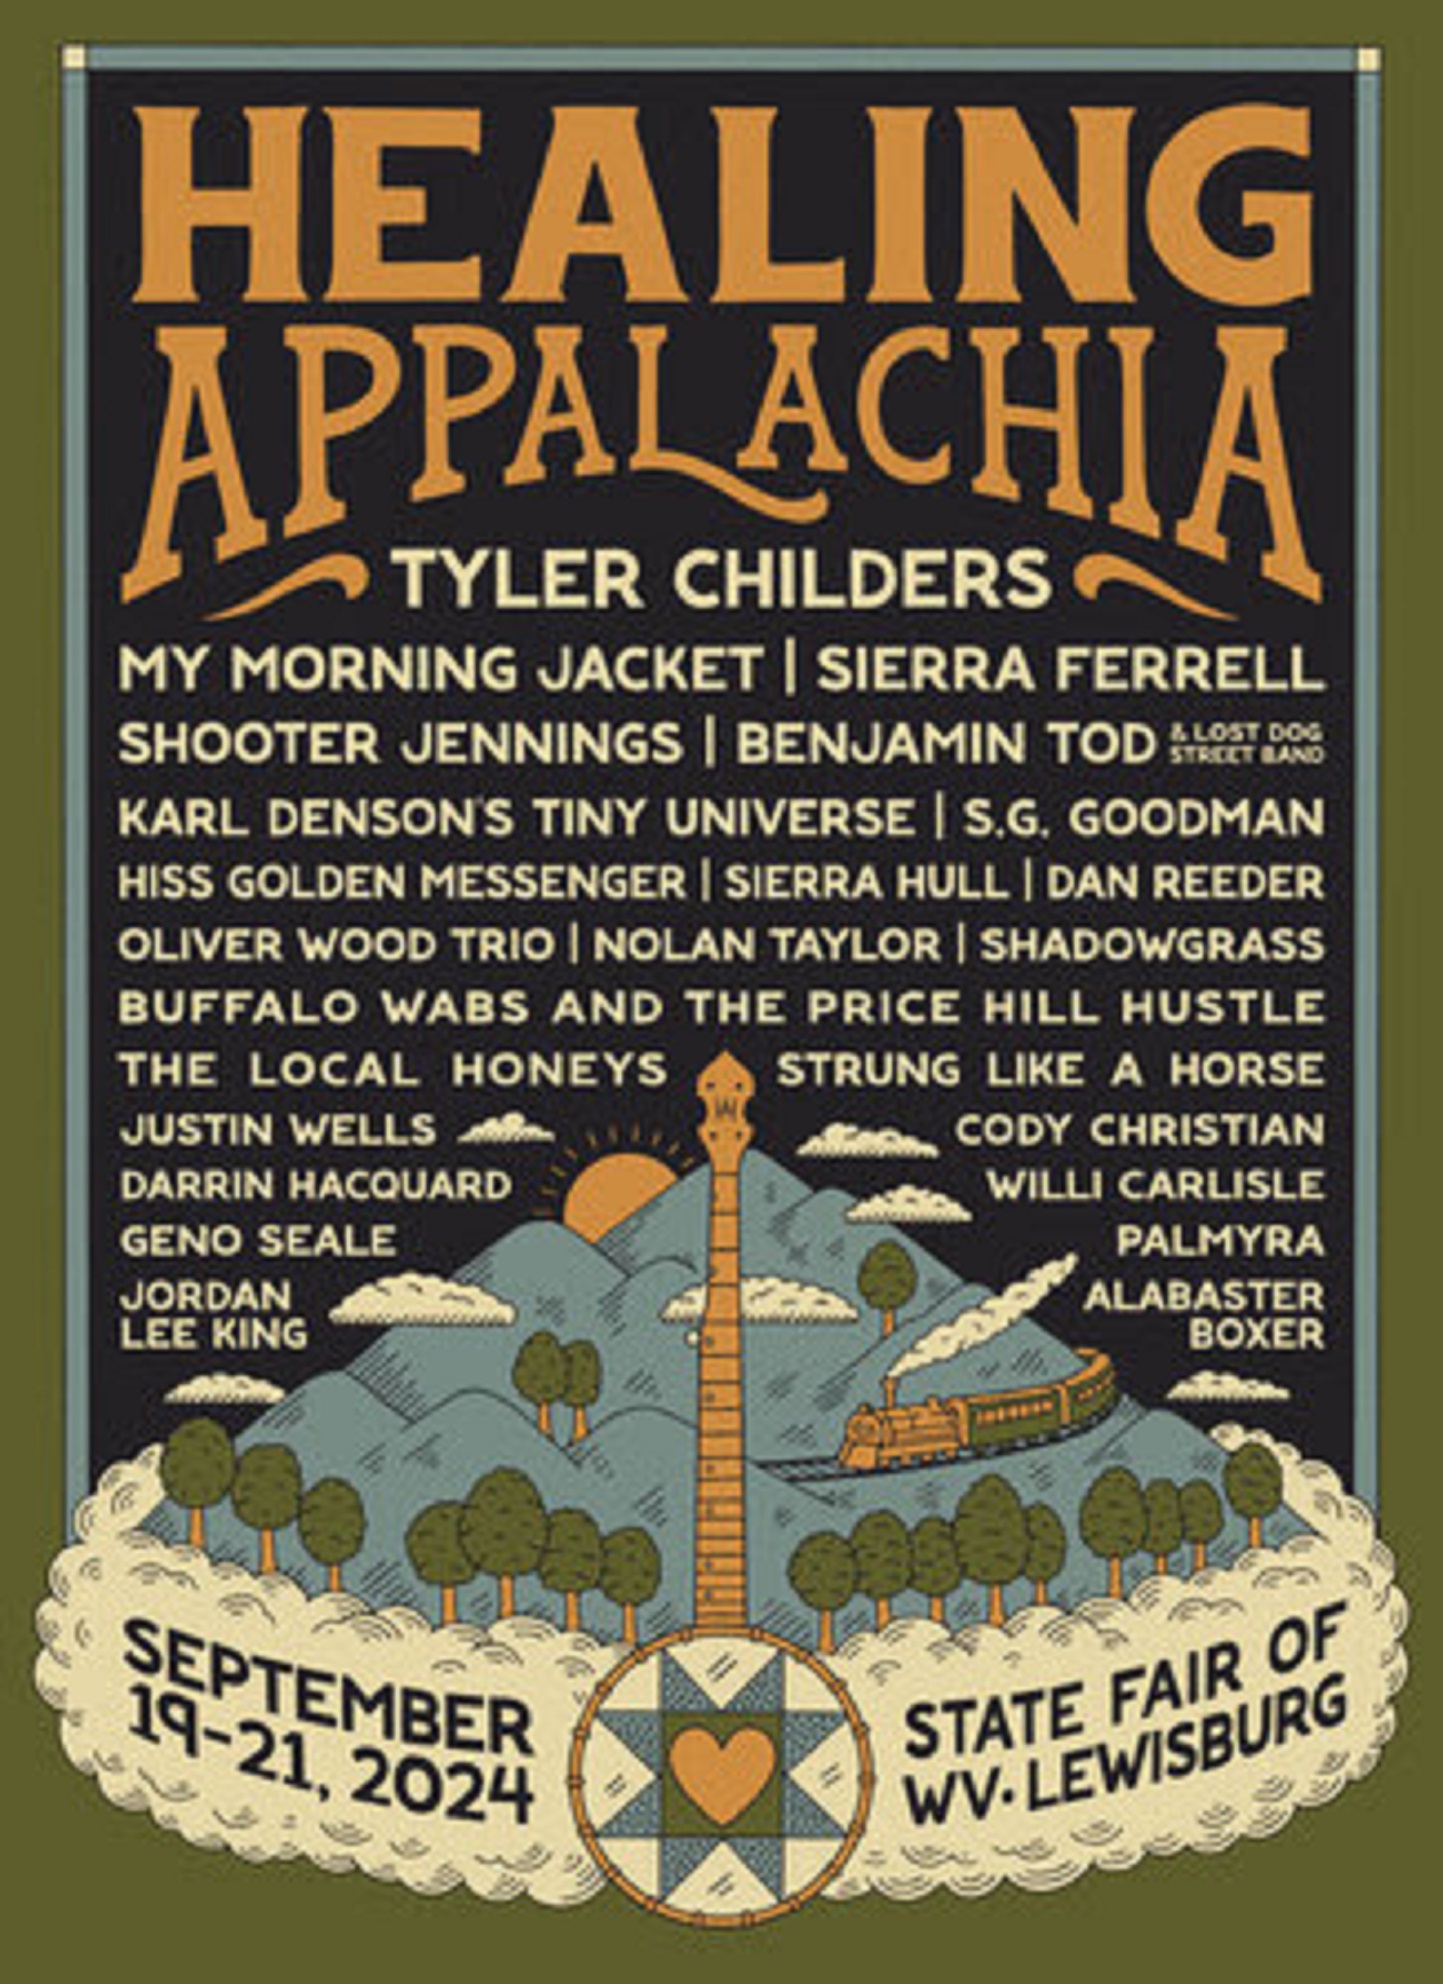 Hope in the Hills’ “Healing Appalachia” benefit concert returns September 19-21